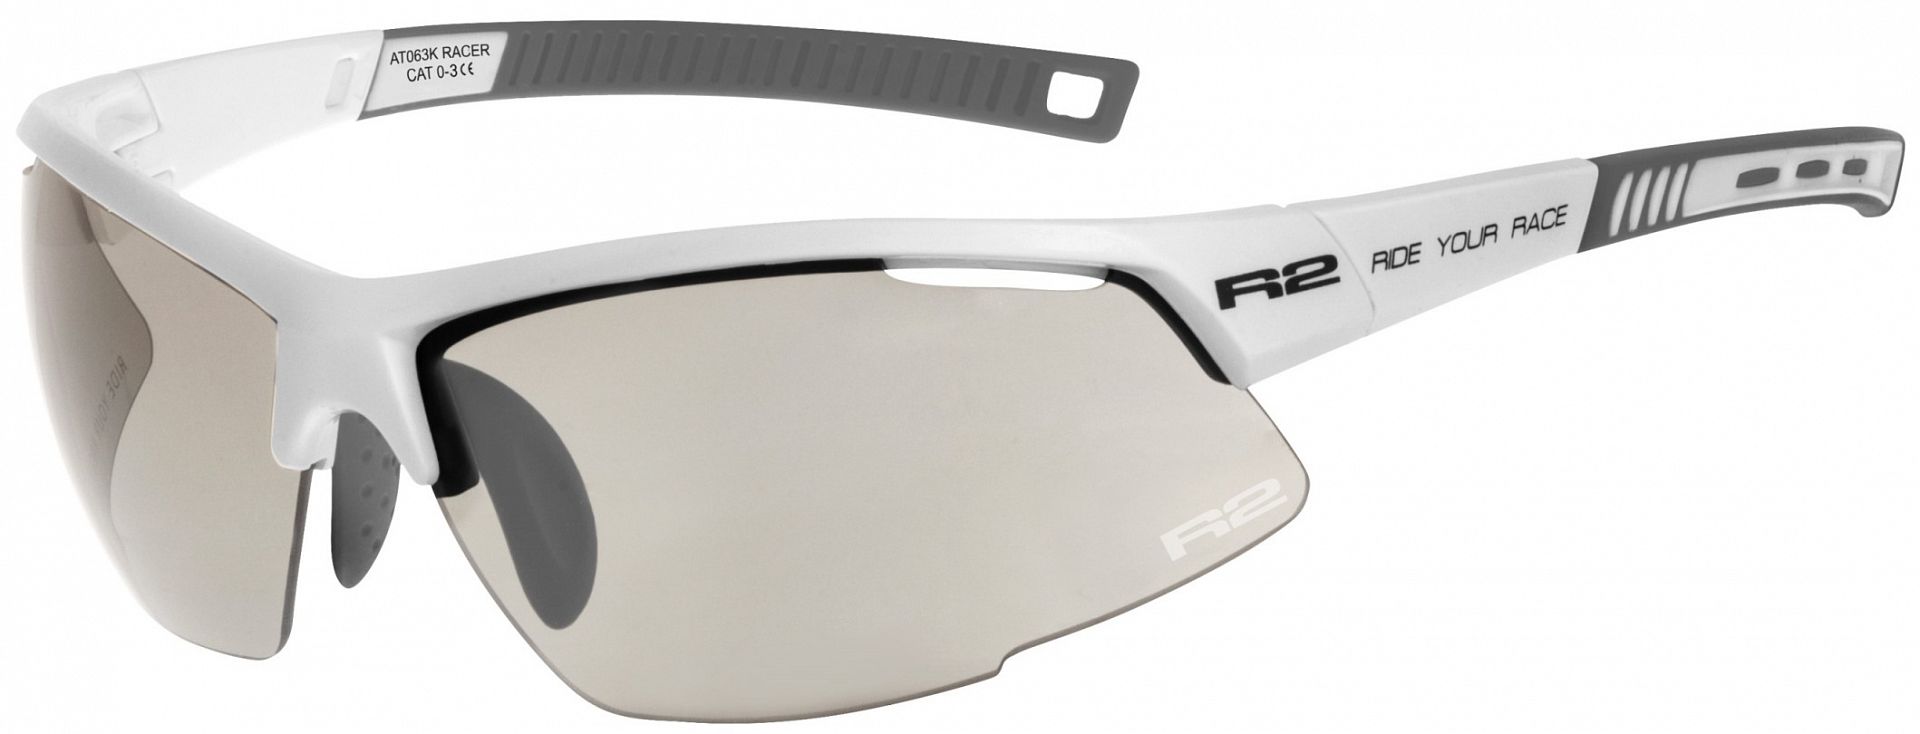 Fotochromatické brýle R2 RACER AT063K bílá